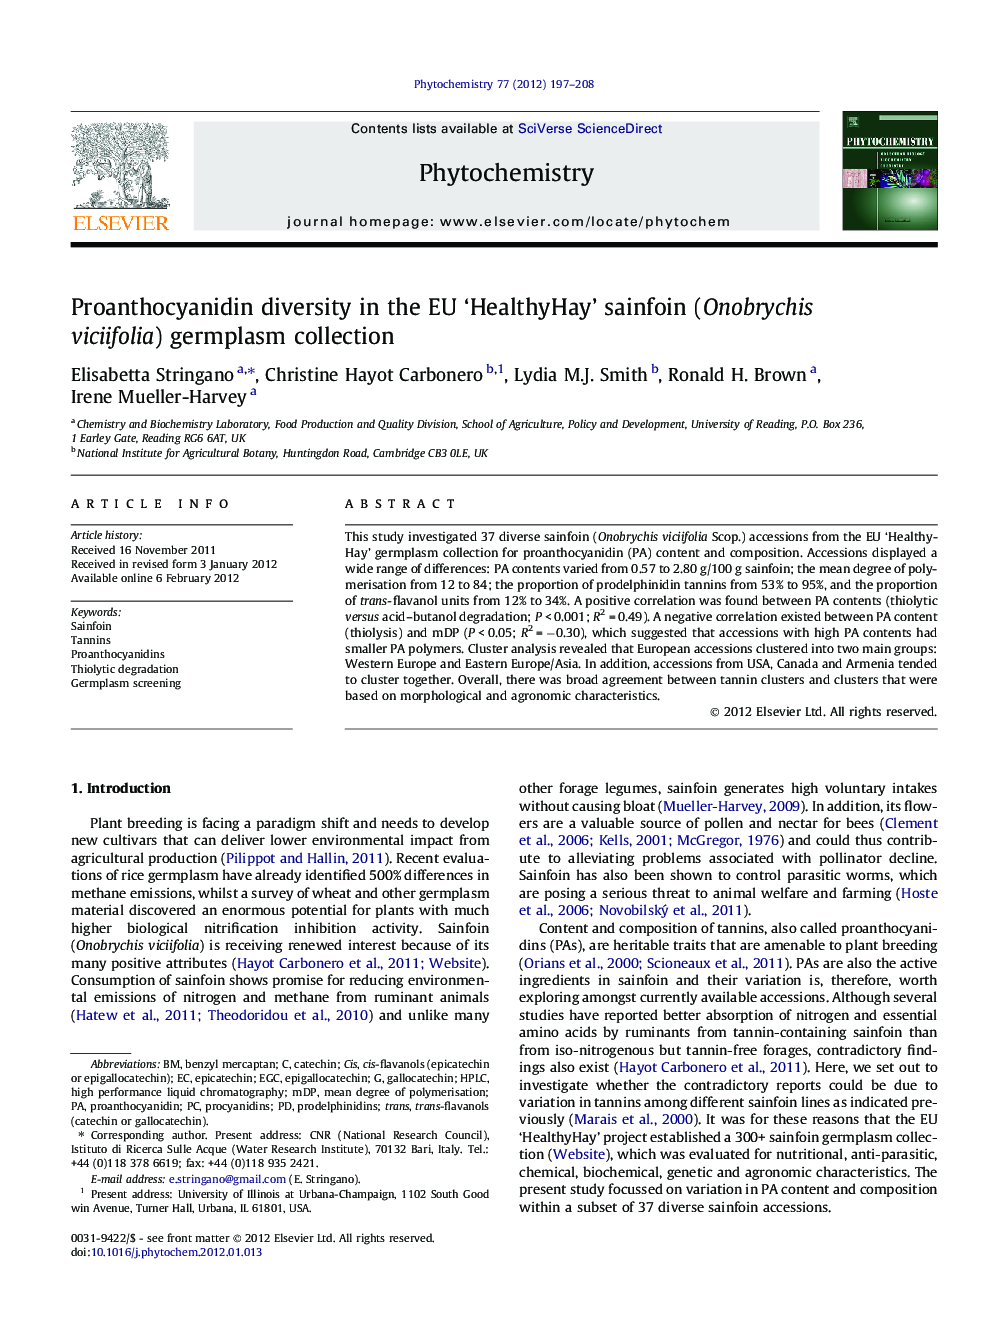 Proanthocyanidin diversity in the EU 'HealthyHay' sainfoin (Onobrychis viciifolia) germplasm collection